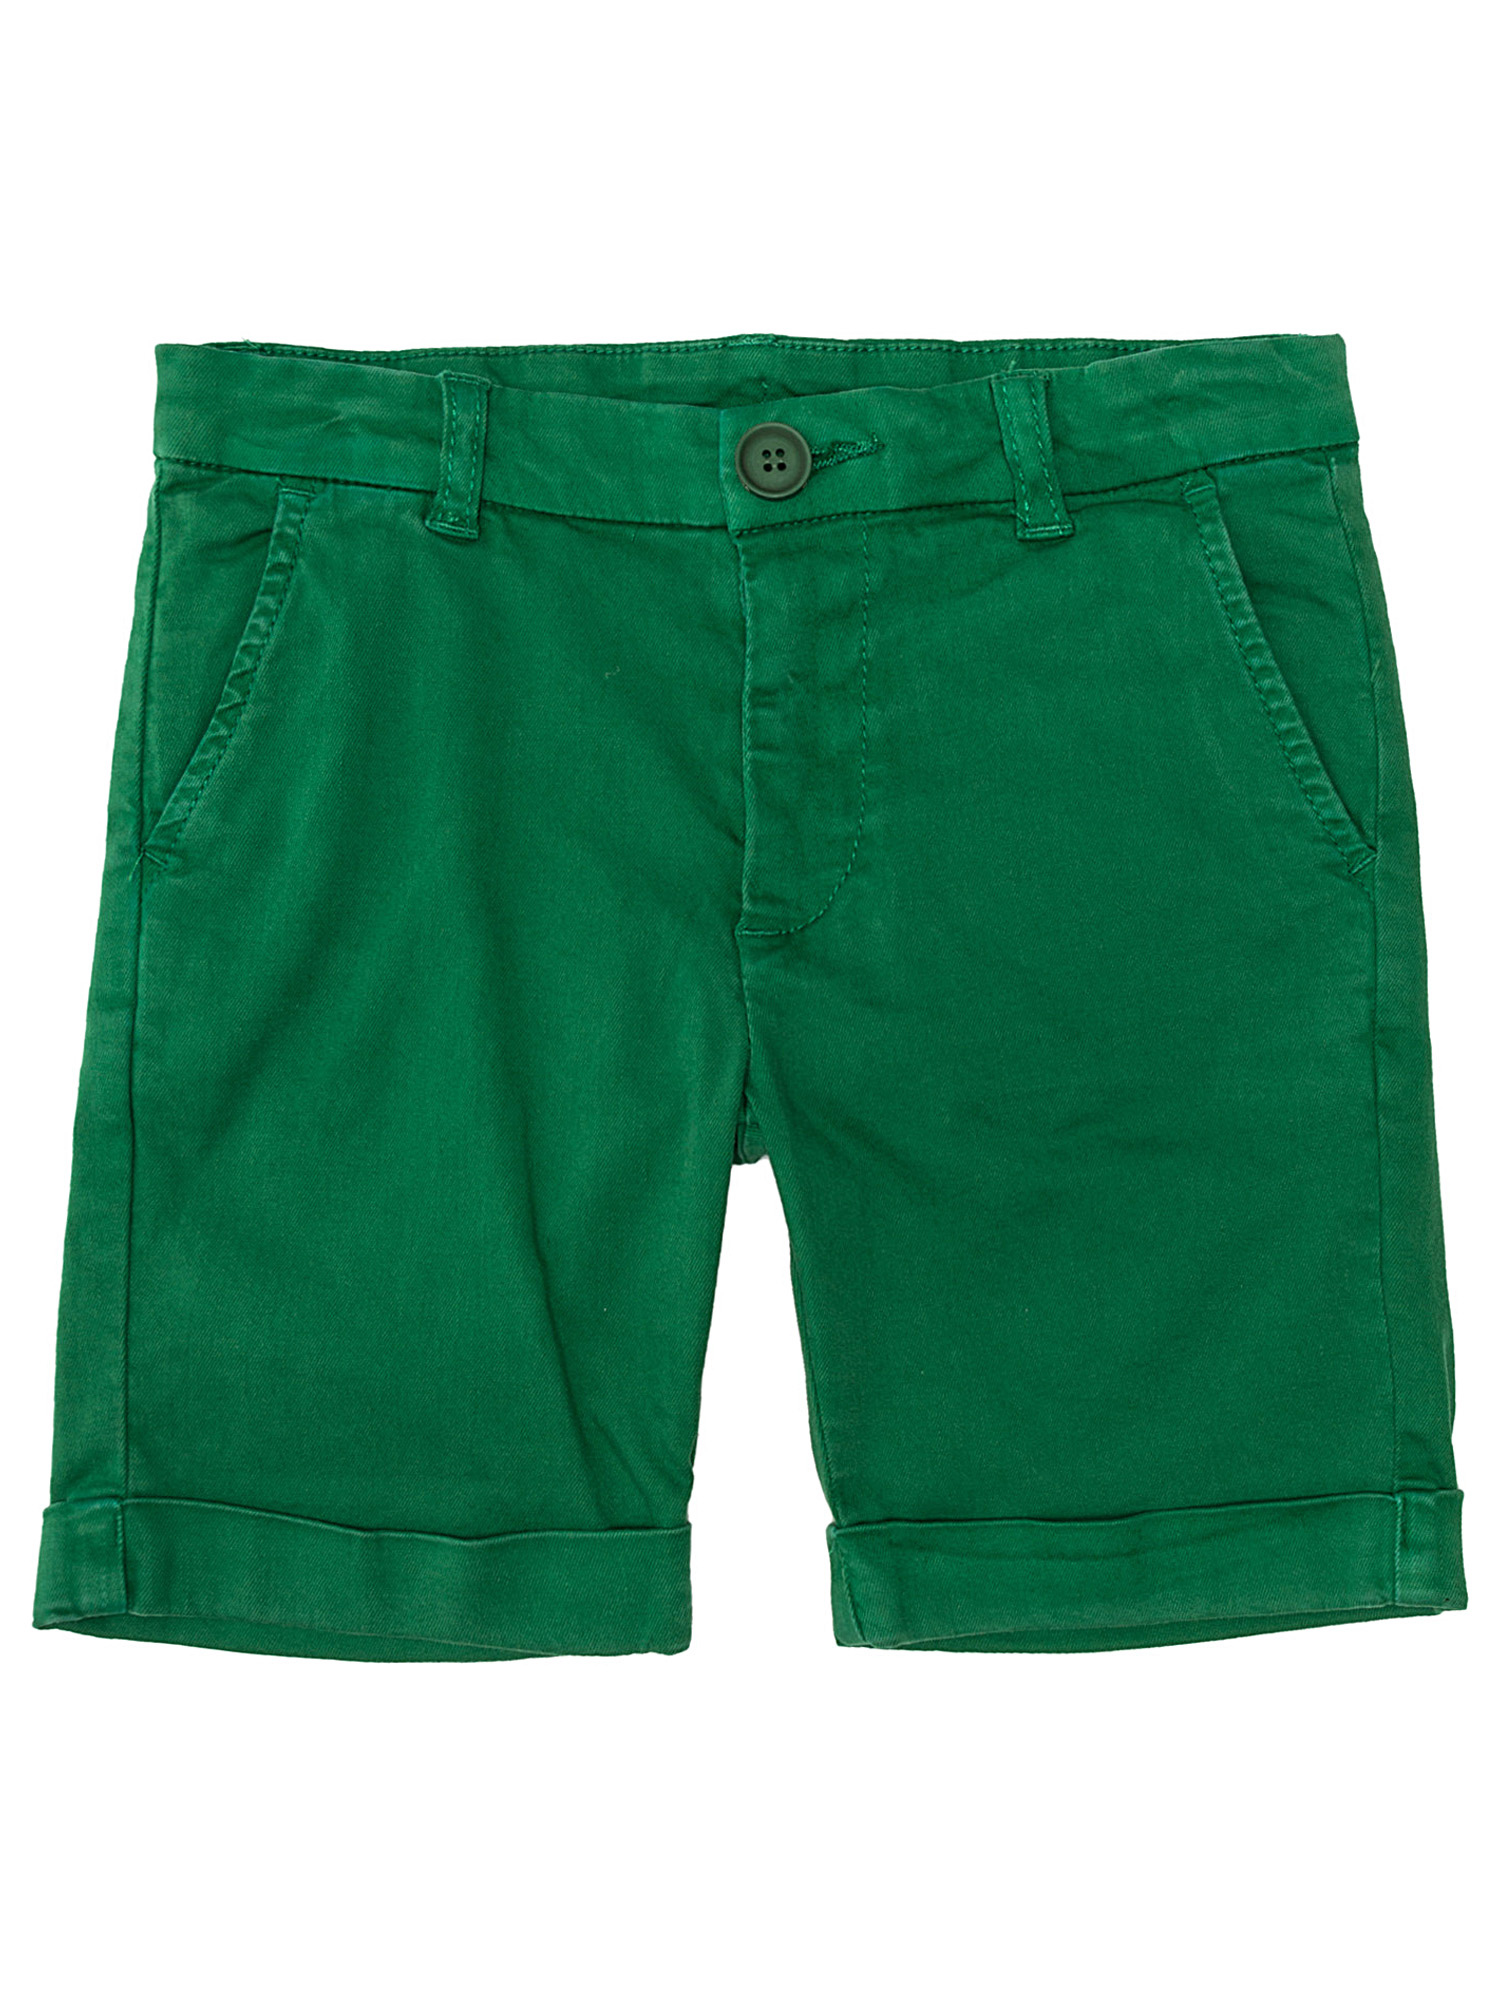 Monnalisa Boys Clothing Shorts Bermudas Pure cotton chino bermudas 